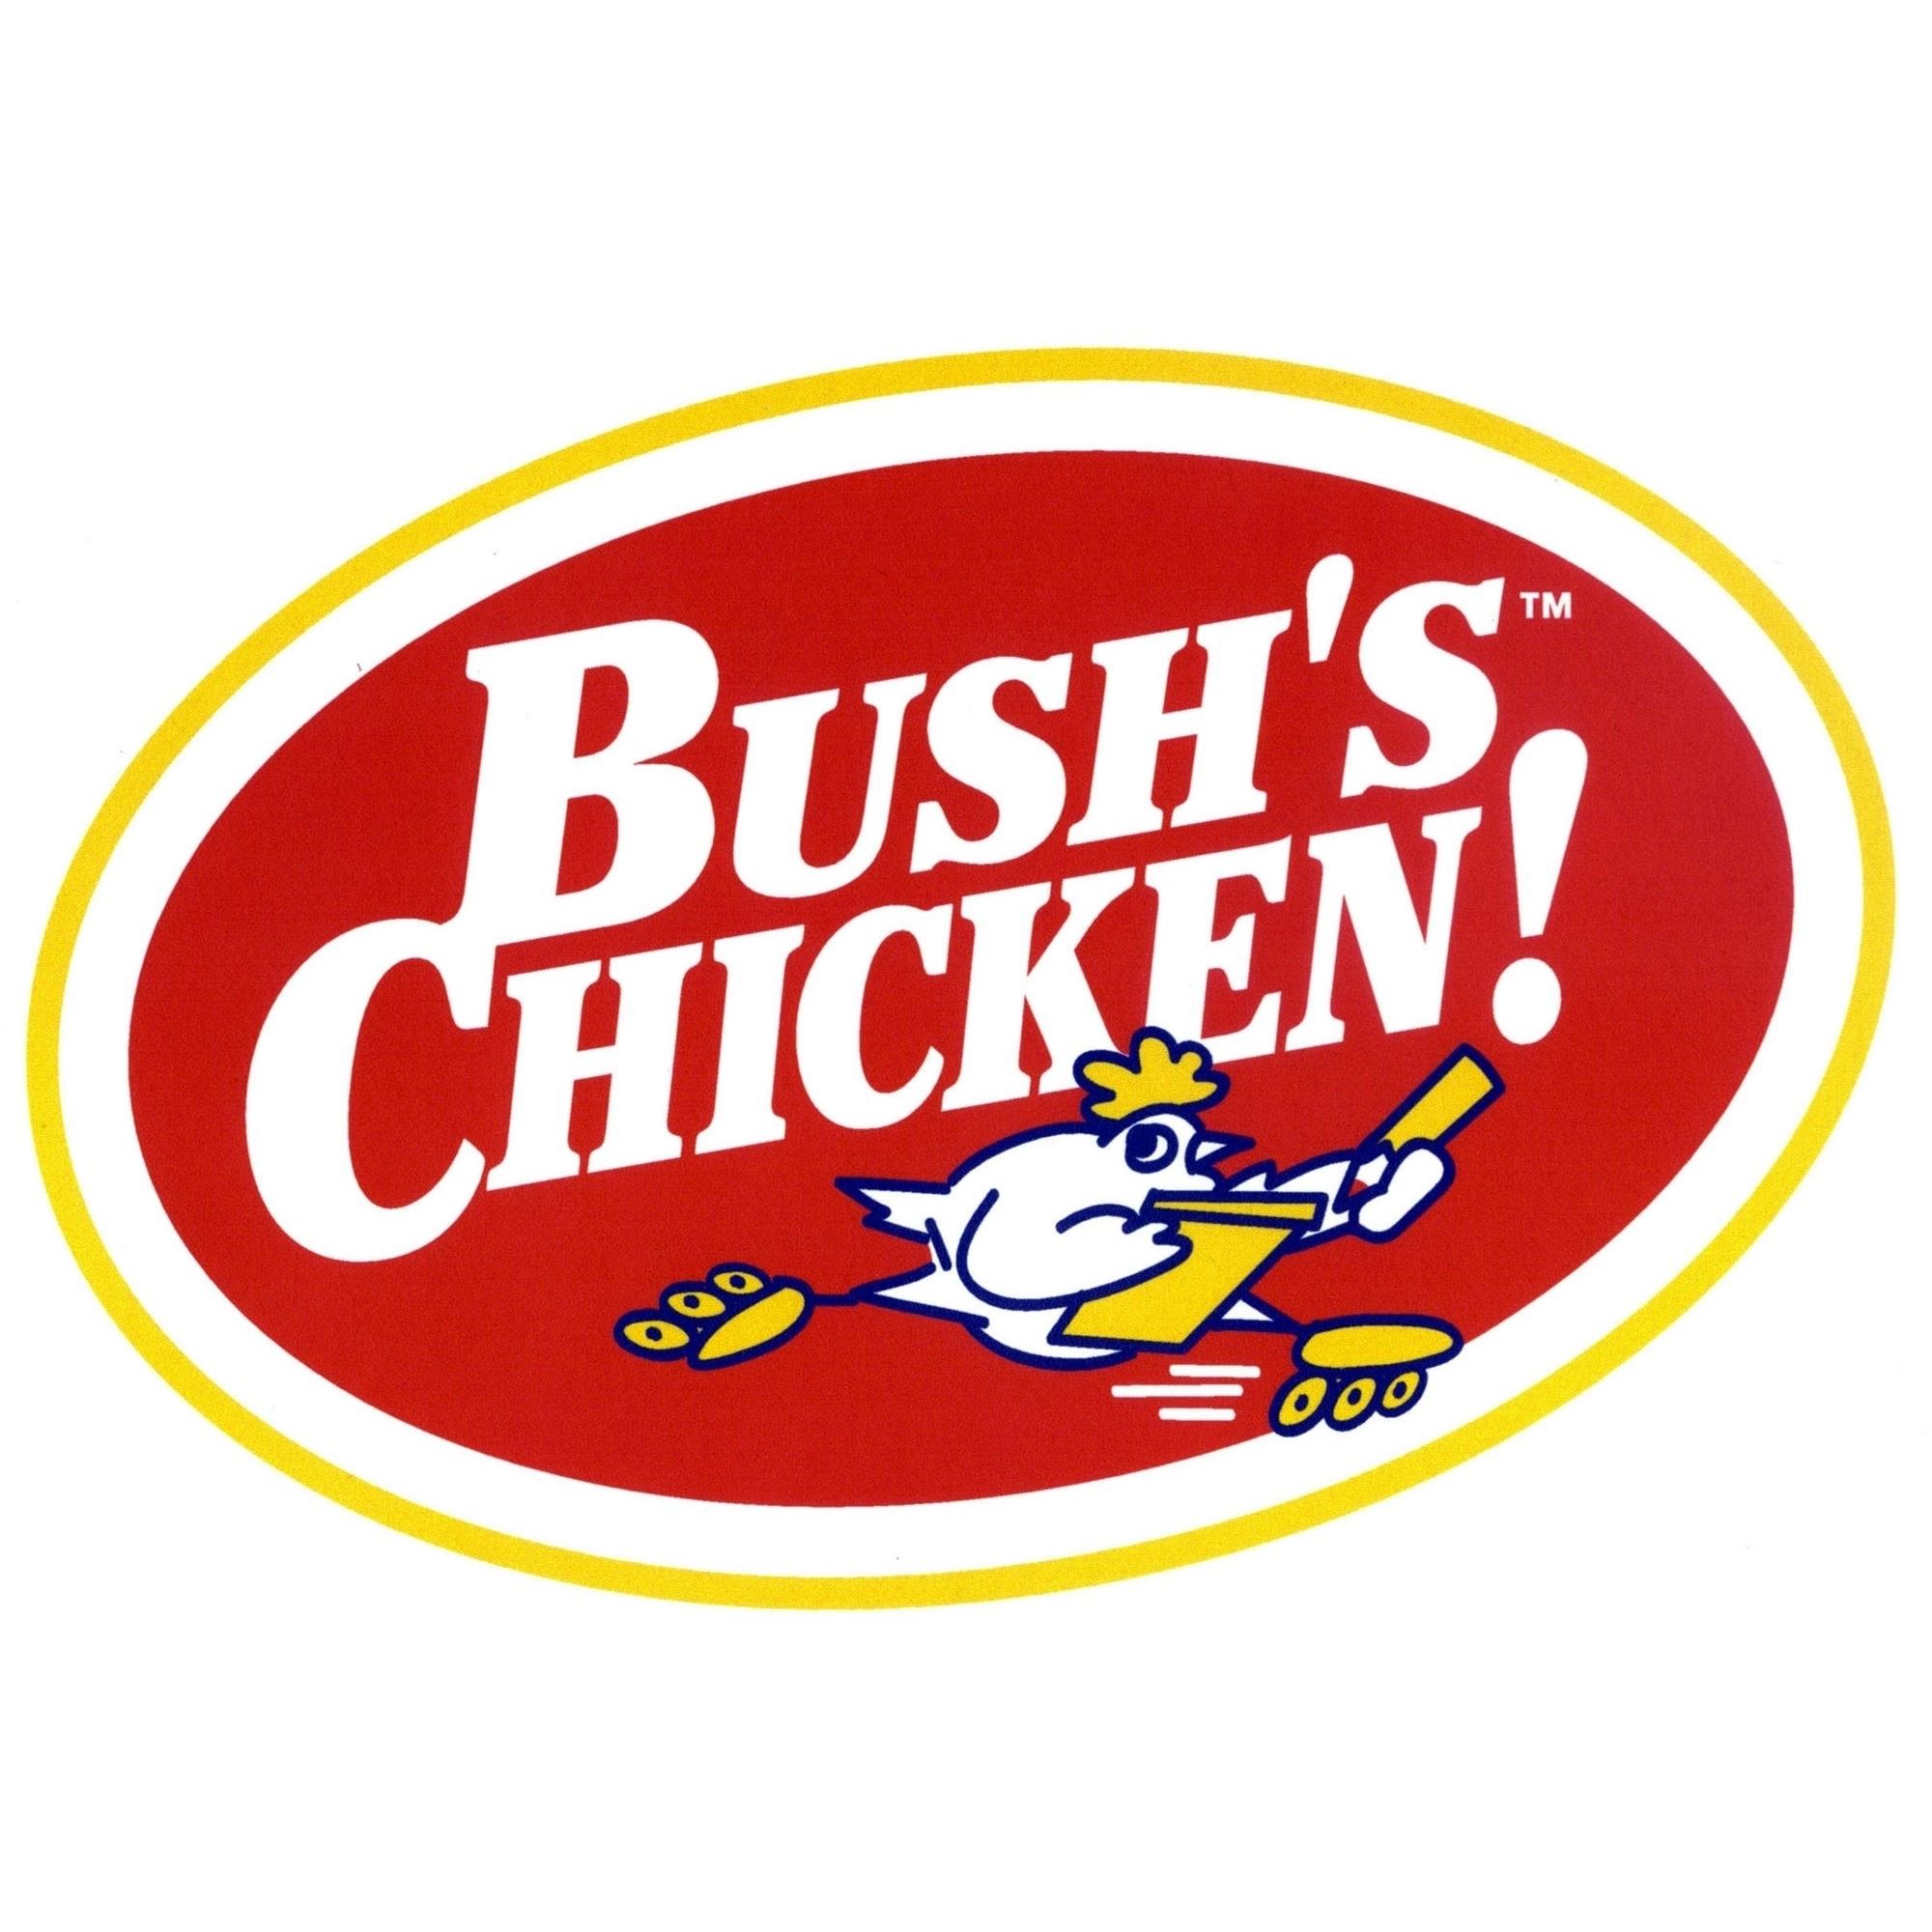 Chick s. Chicken Express логотип. Буше логотип. Chicken Express Fried logo. Chicken dinner логотип.